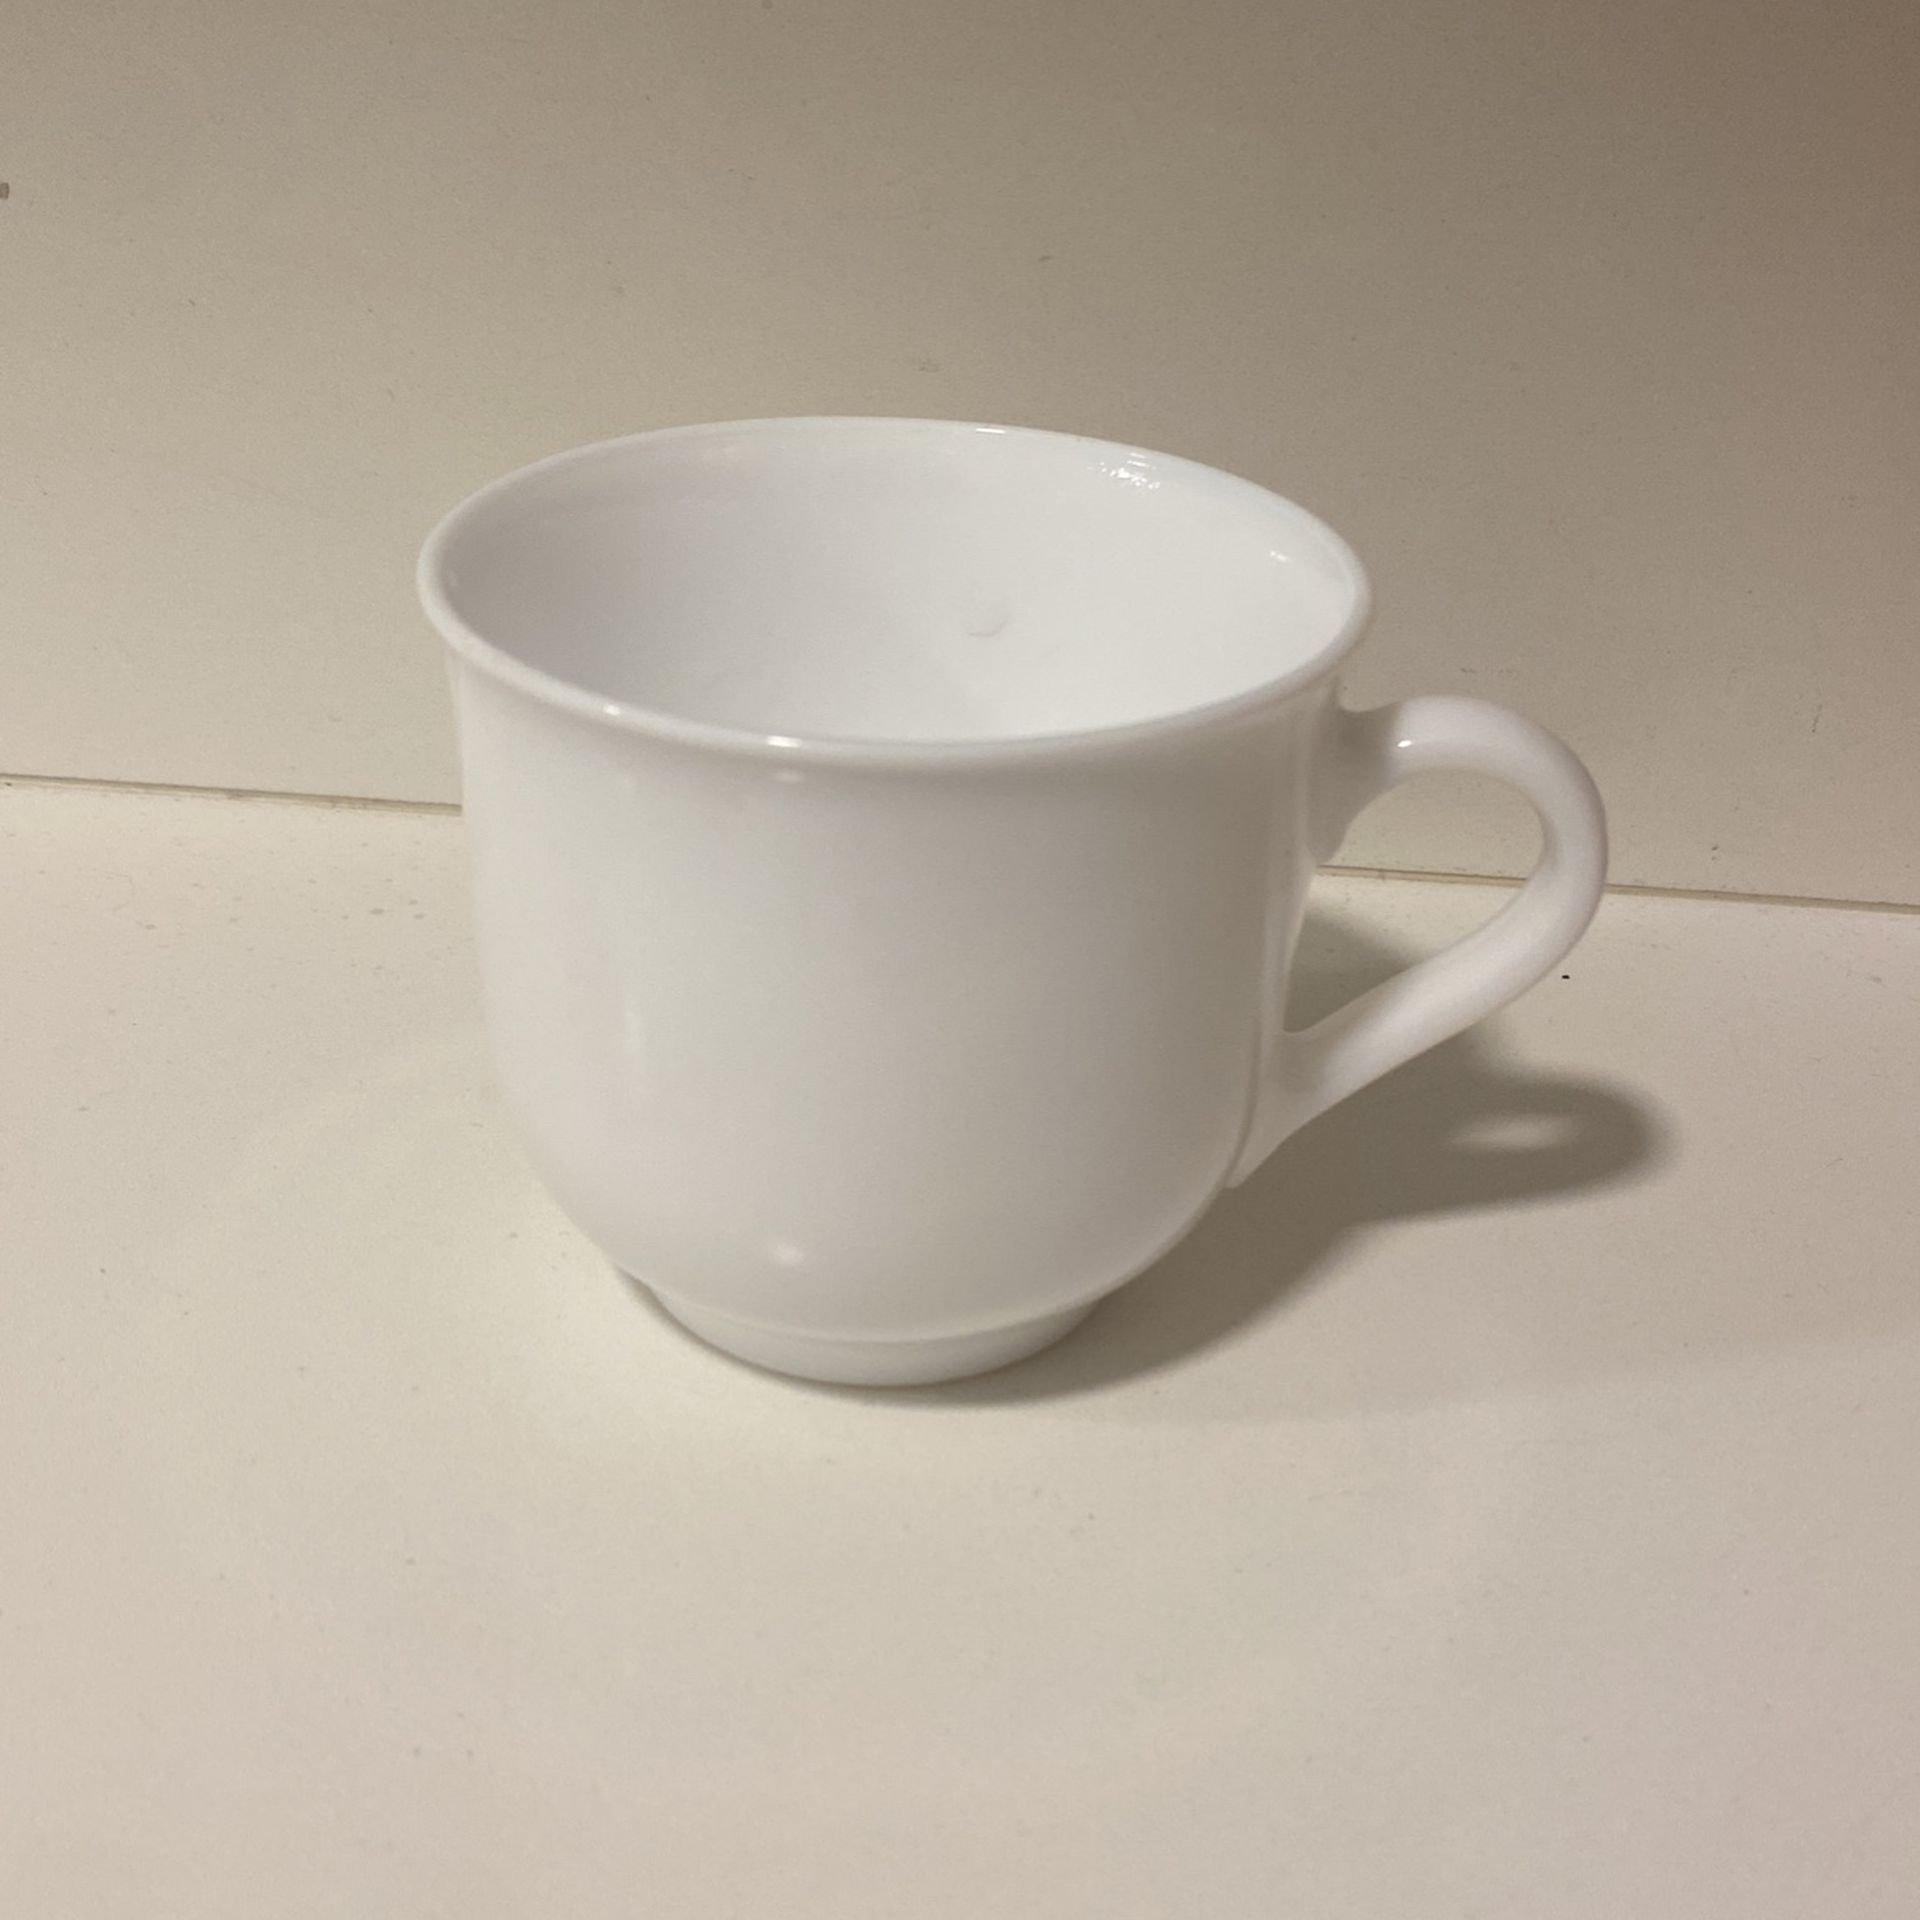 21-White Porcelain Coffee Cups 8oz